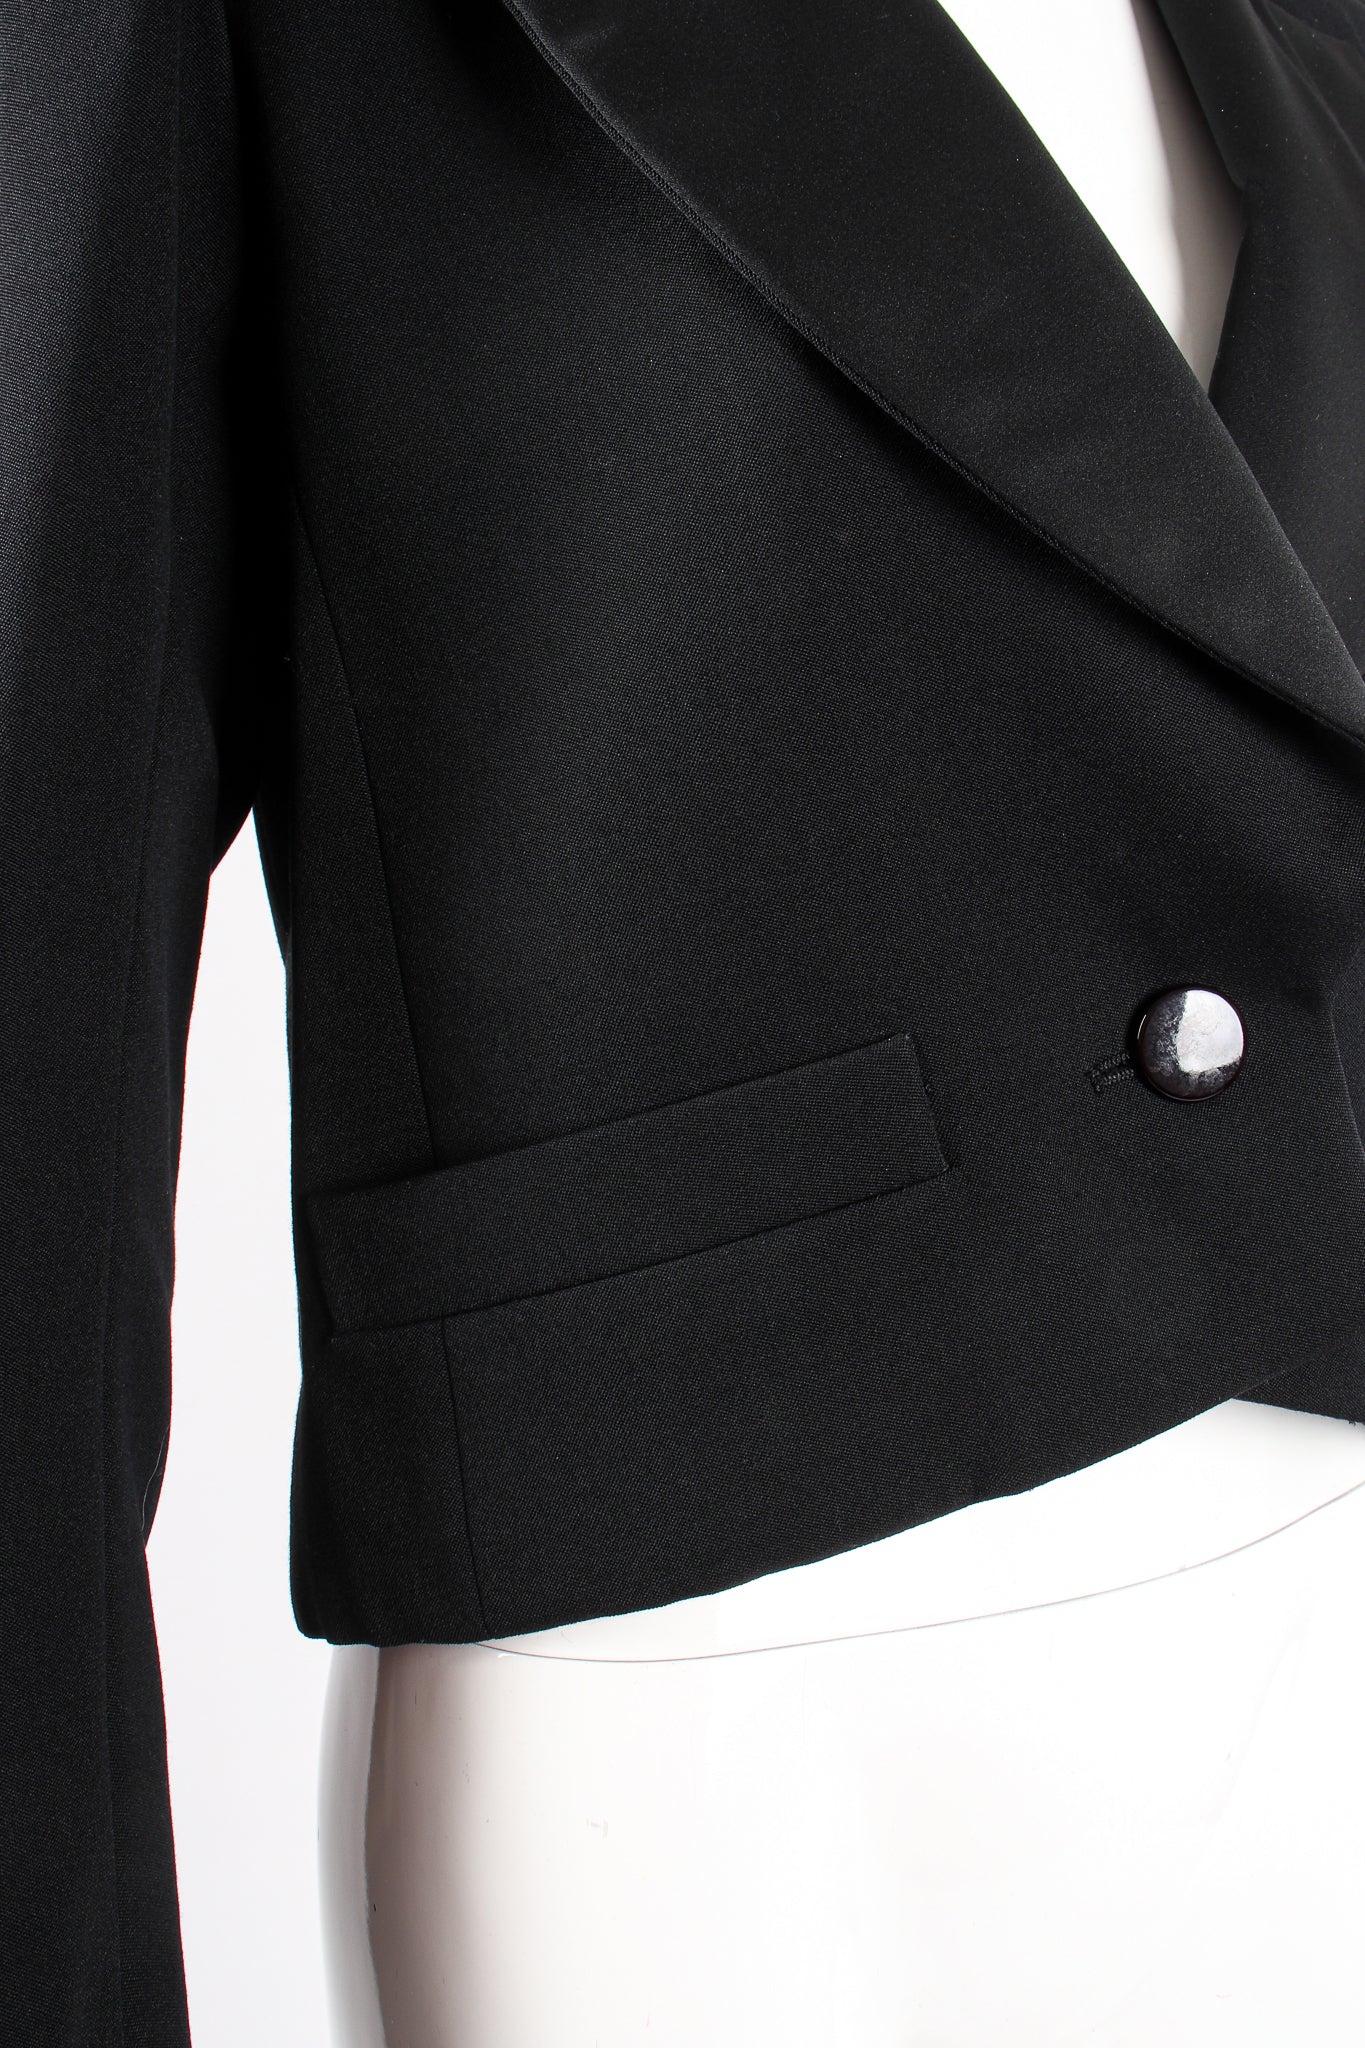 Vintage Yves Saint Laurent YSL Cropped Tuxedo Jacket on Mannequin pocket at Recess Los Angeles